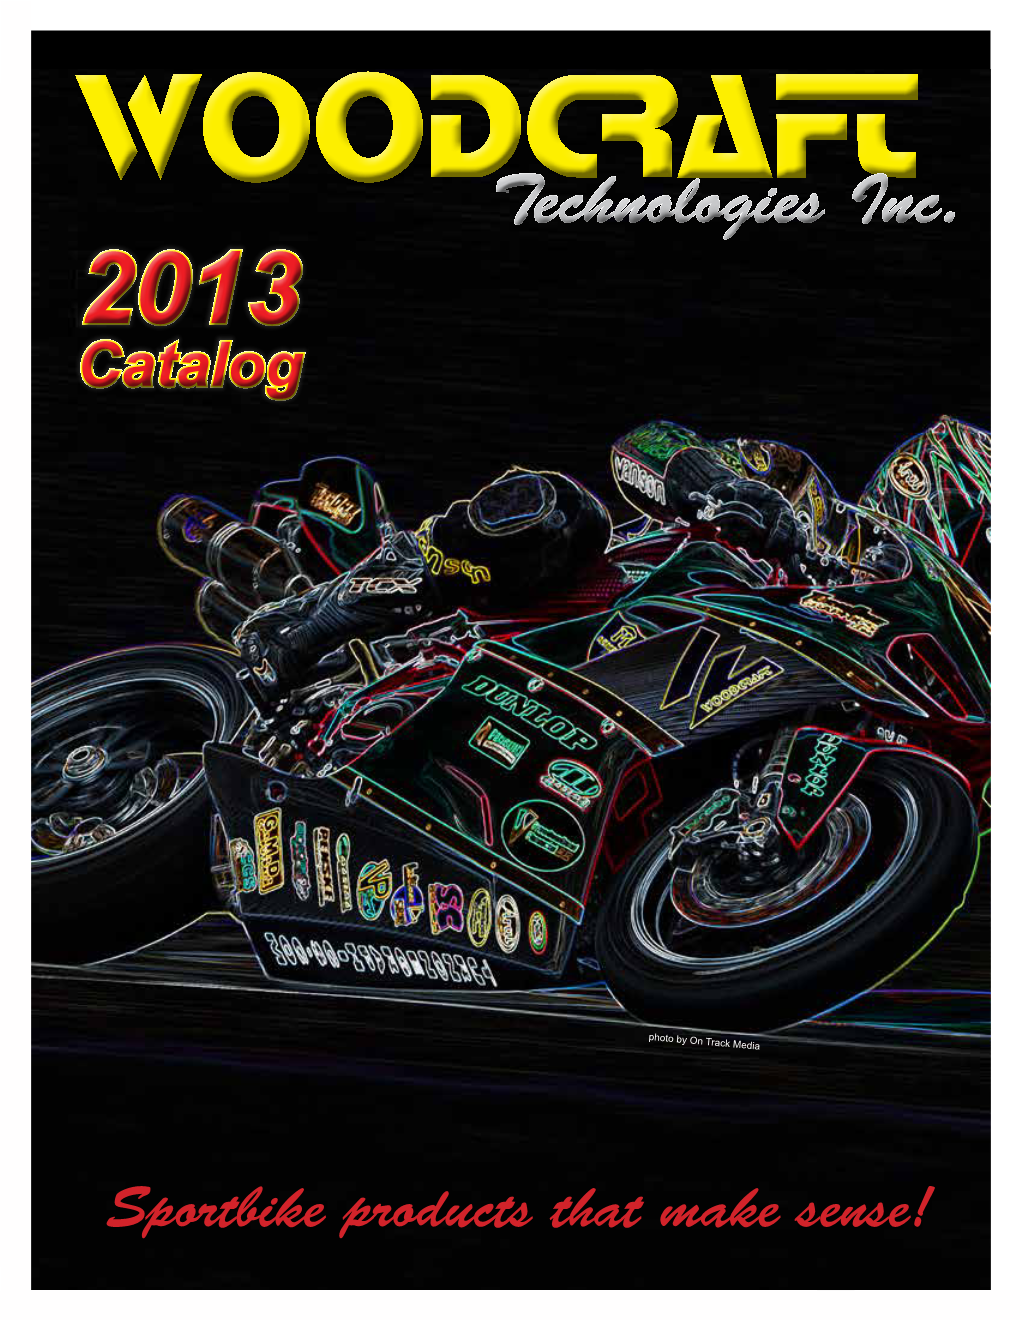 Technologies Inc. 2013 Catalog